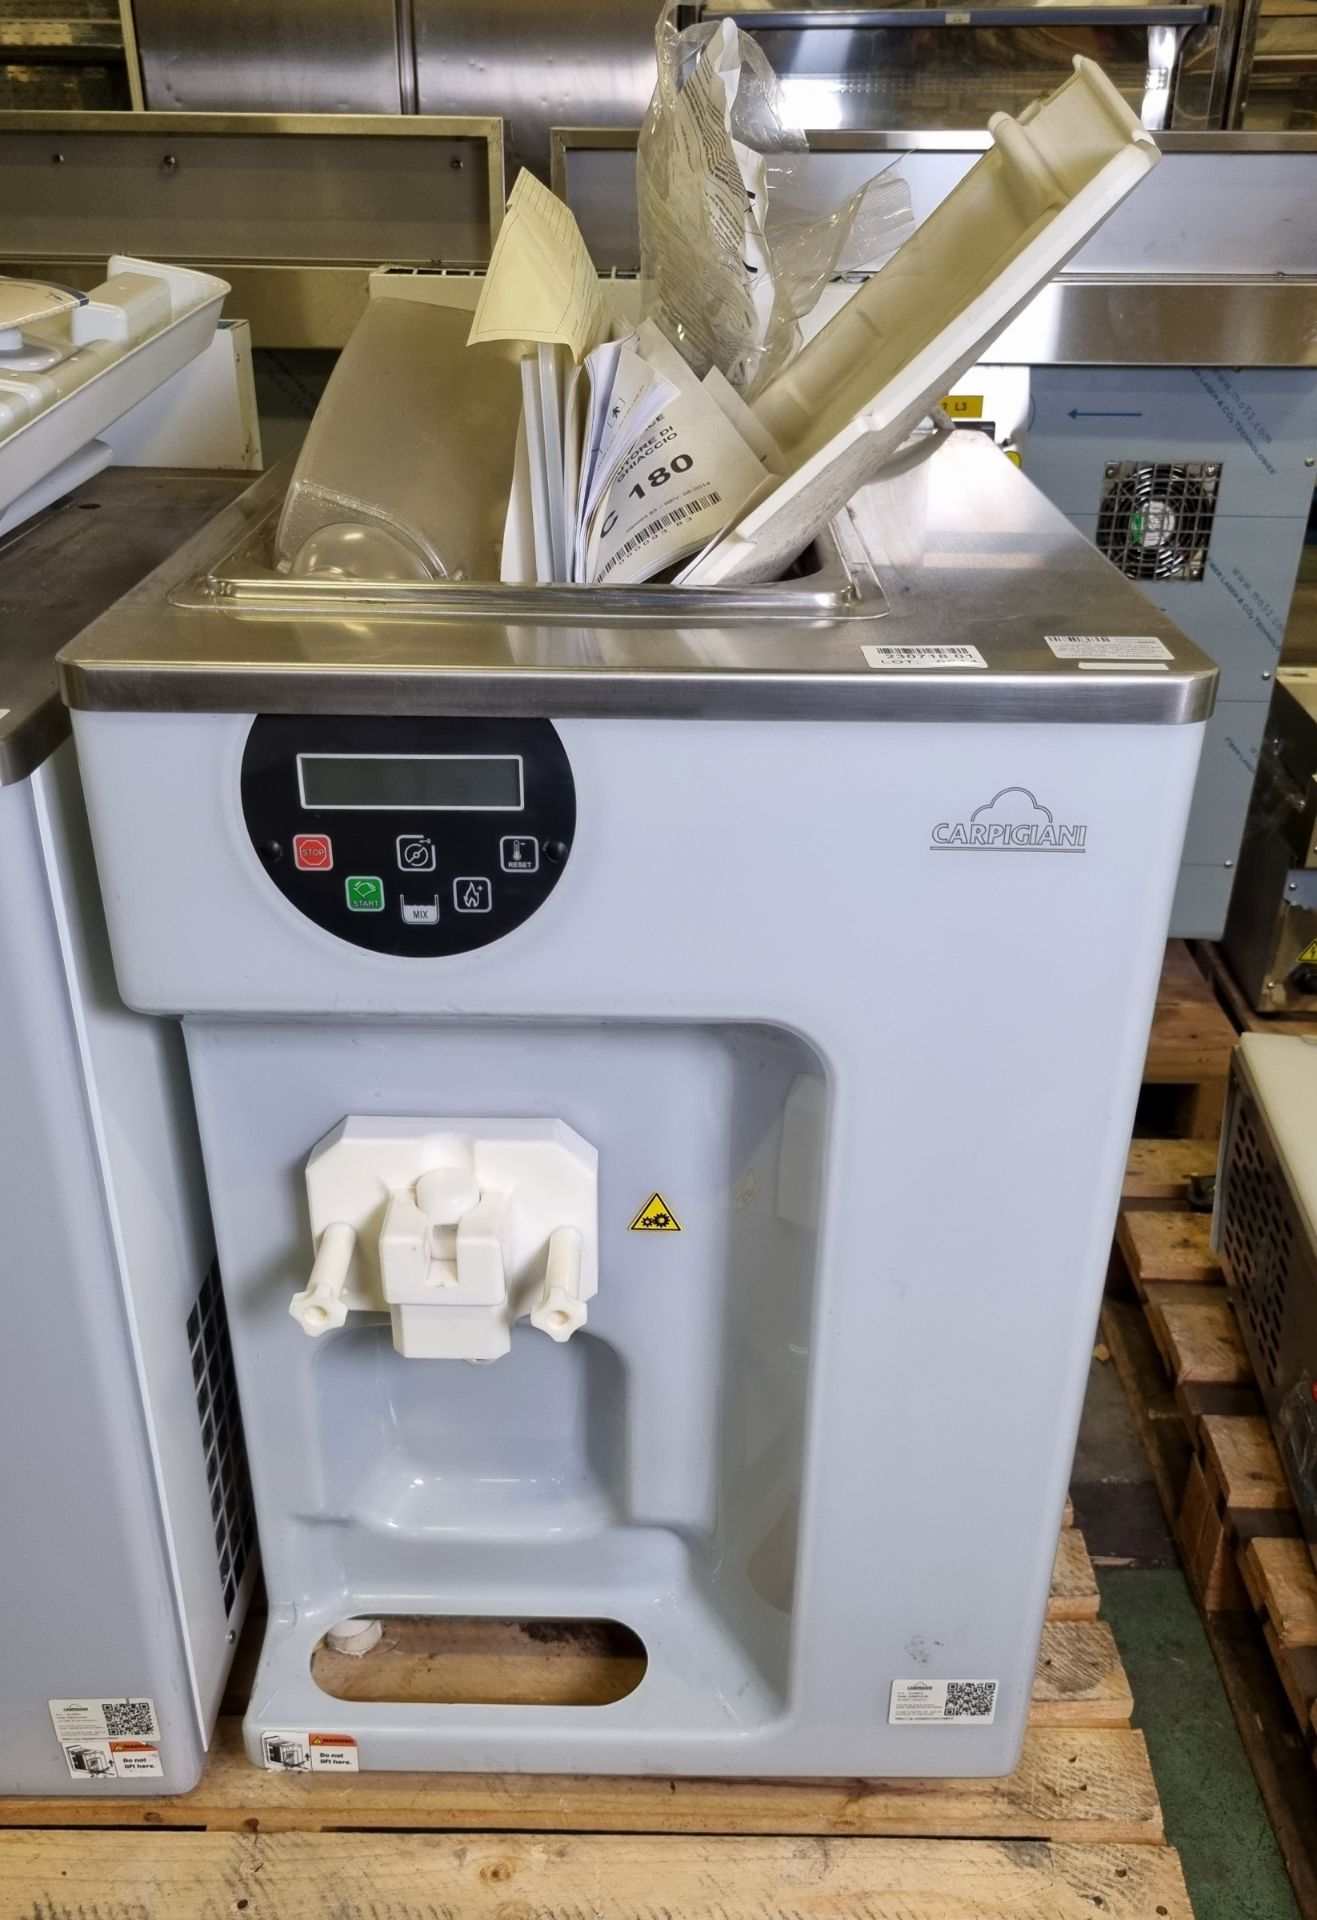 Carpigiani 191SPEP ice cream machine - countertop pump-fed soft serve model with heat treatment